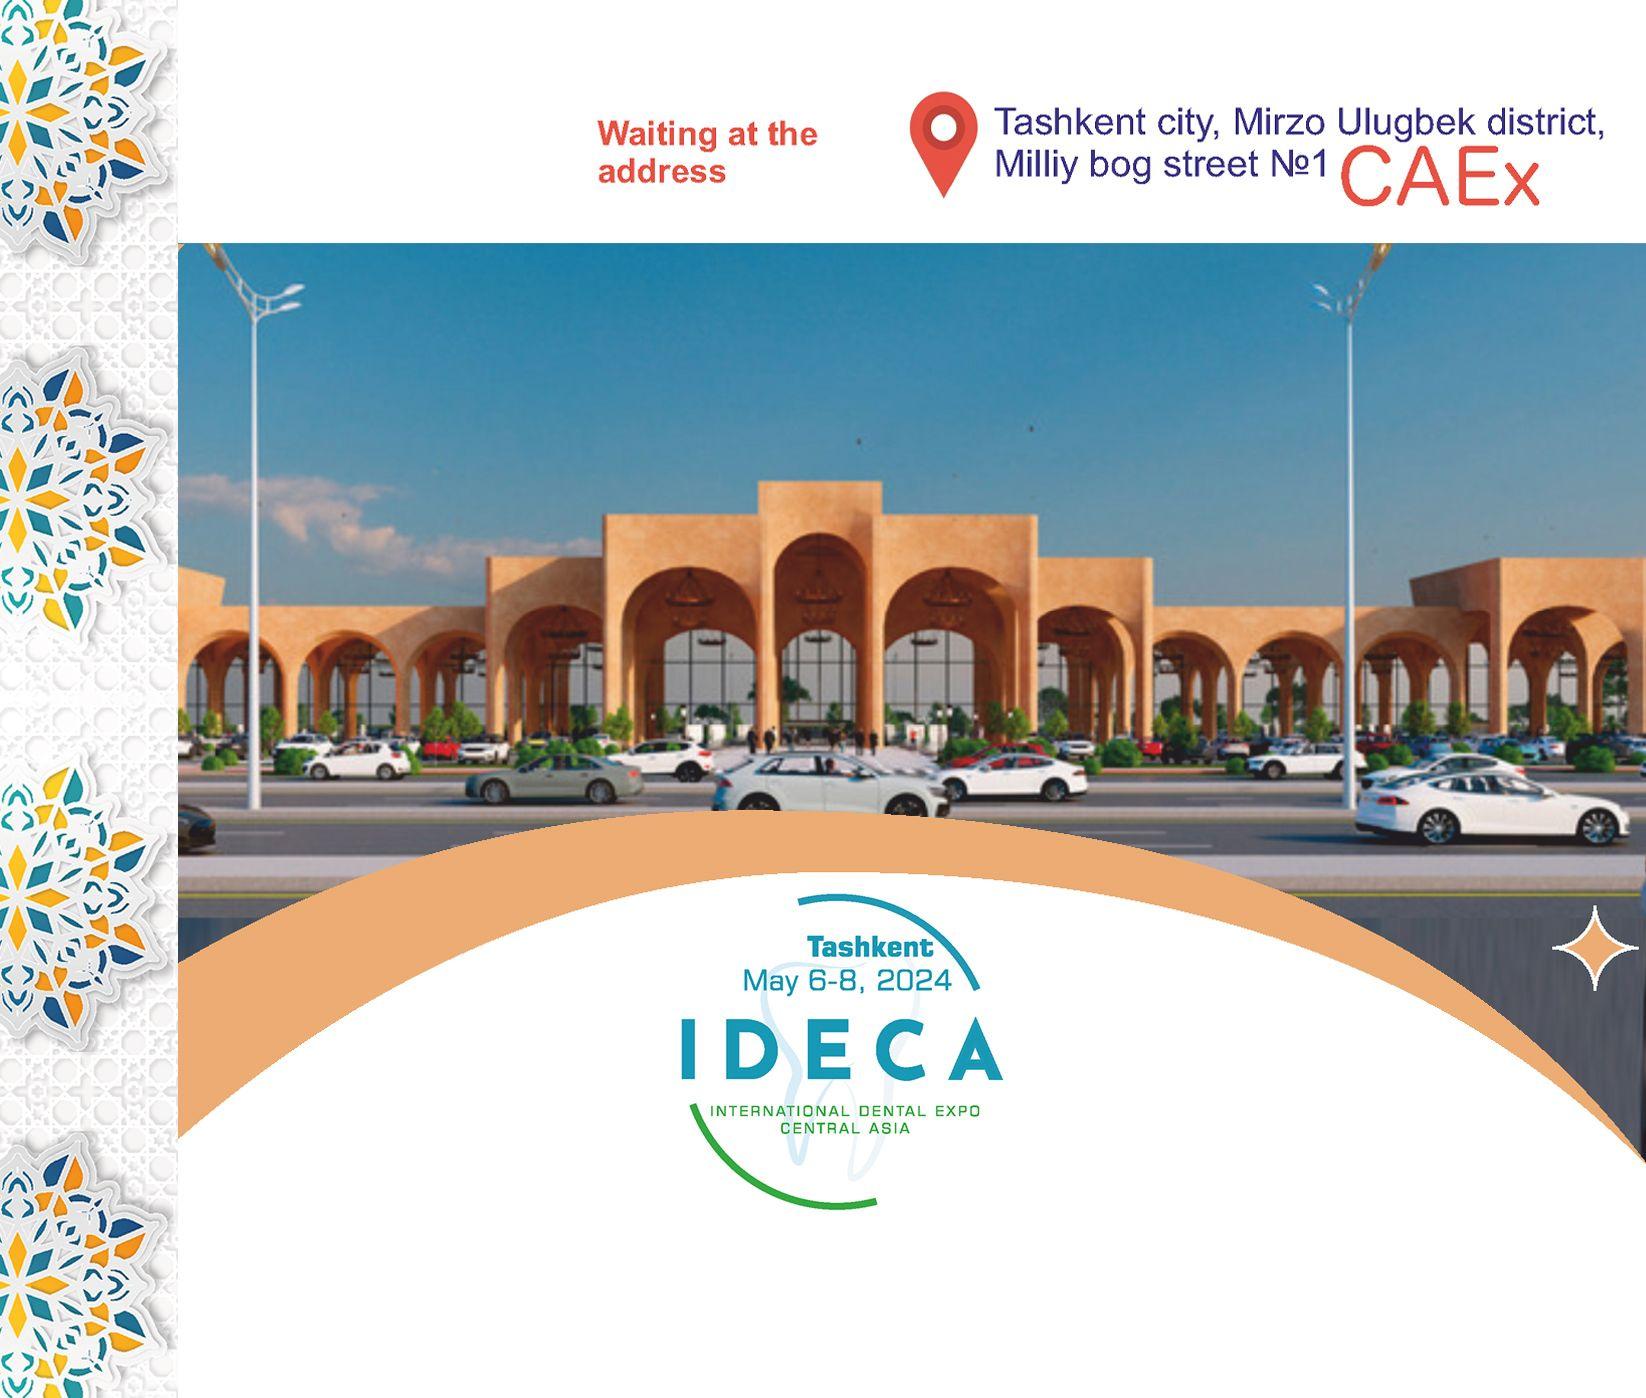 IDECA set to transform Tashkent into a hub of dental innovation